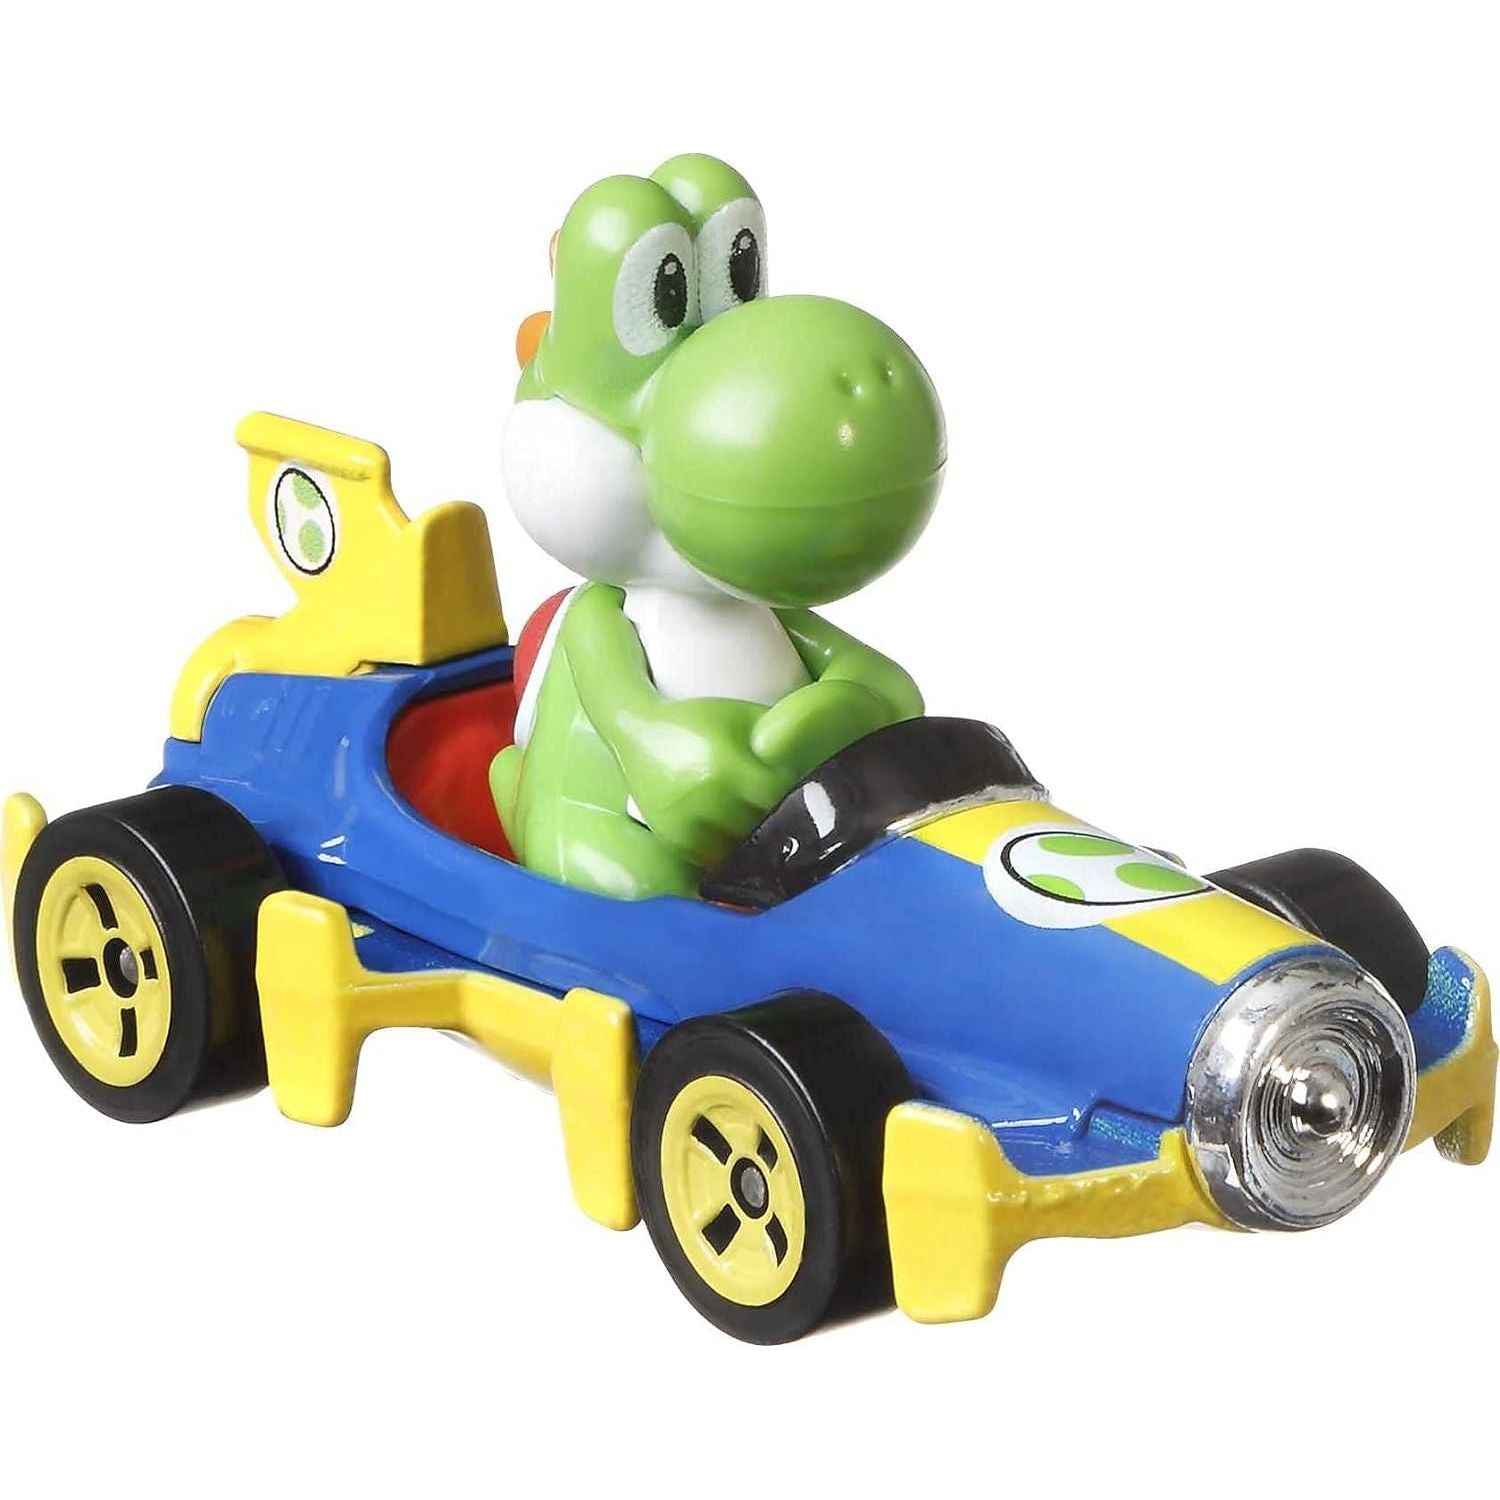 Hot Wheels Mario Kart Vehicle 4-Pack, Set of 4 Fan-Favorite Characters Includes 1 Exclusive Model